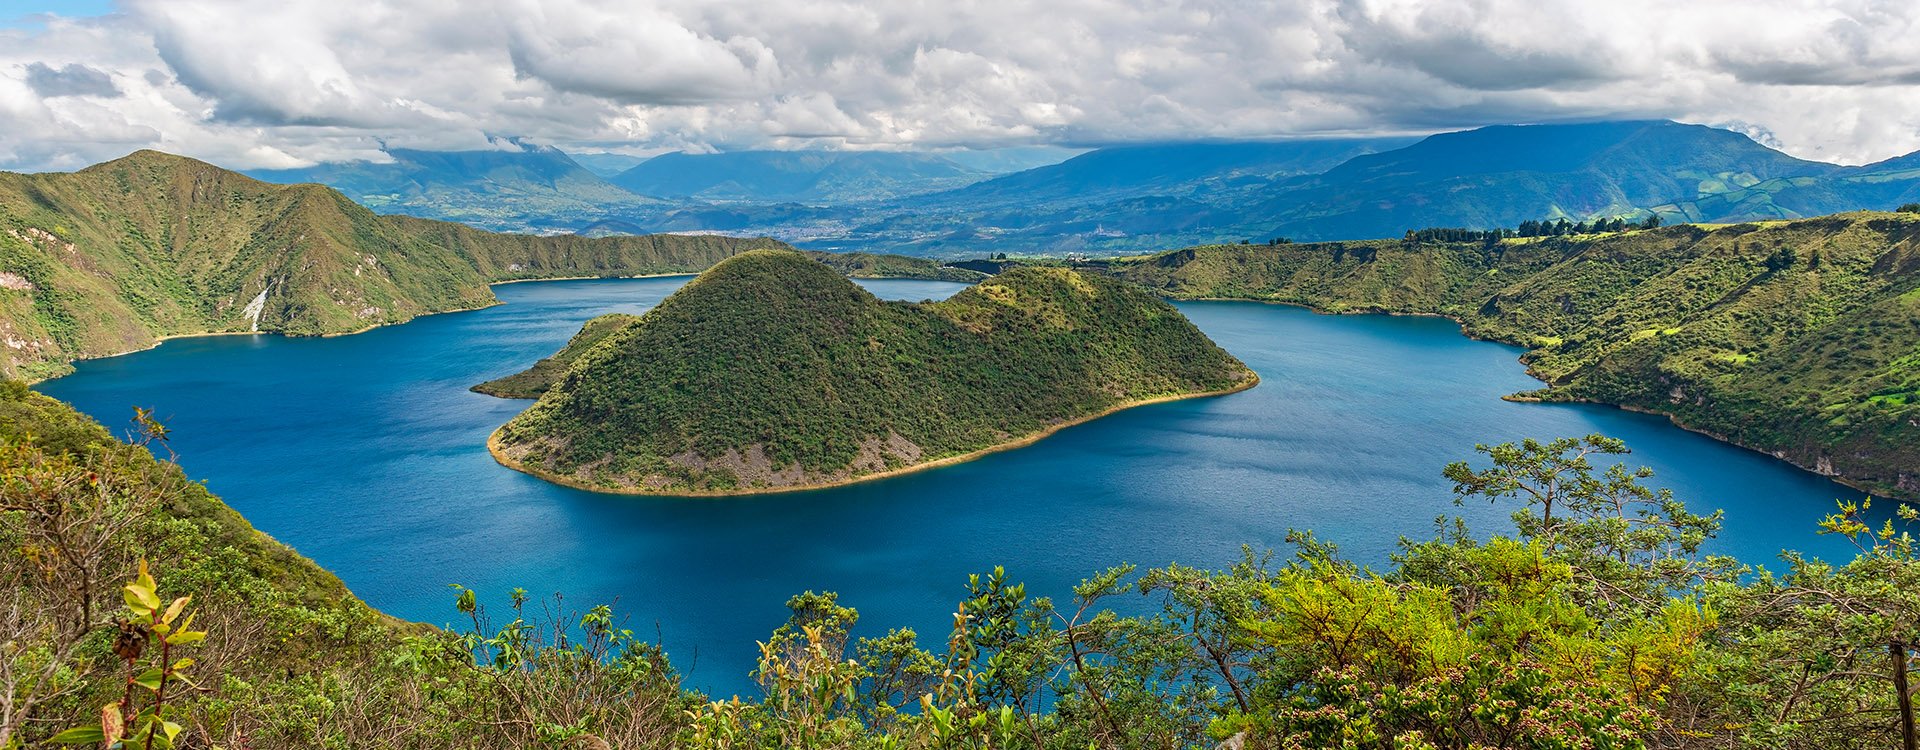 The Cuicocha crater lake or lagoon with the Teodoro Wolf and Yerovi islands near Otavalo, north of Quito, Ecuador